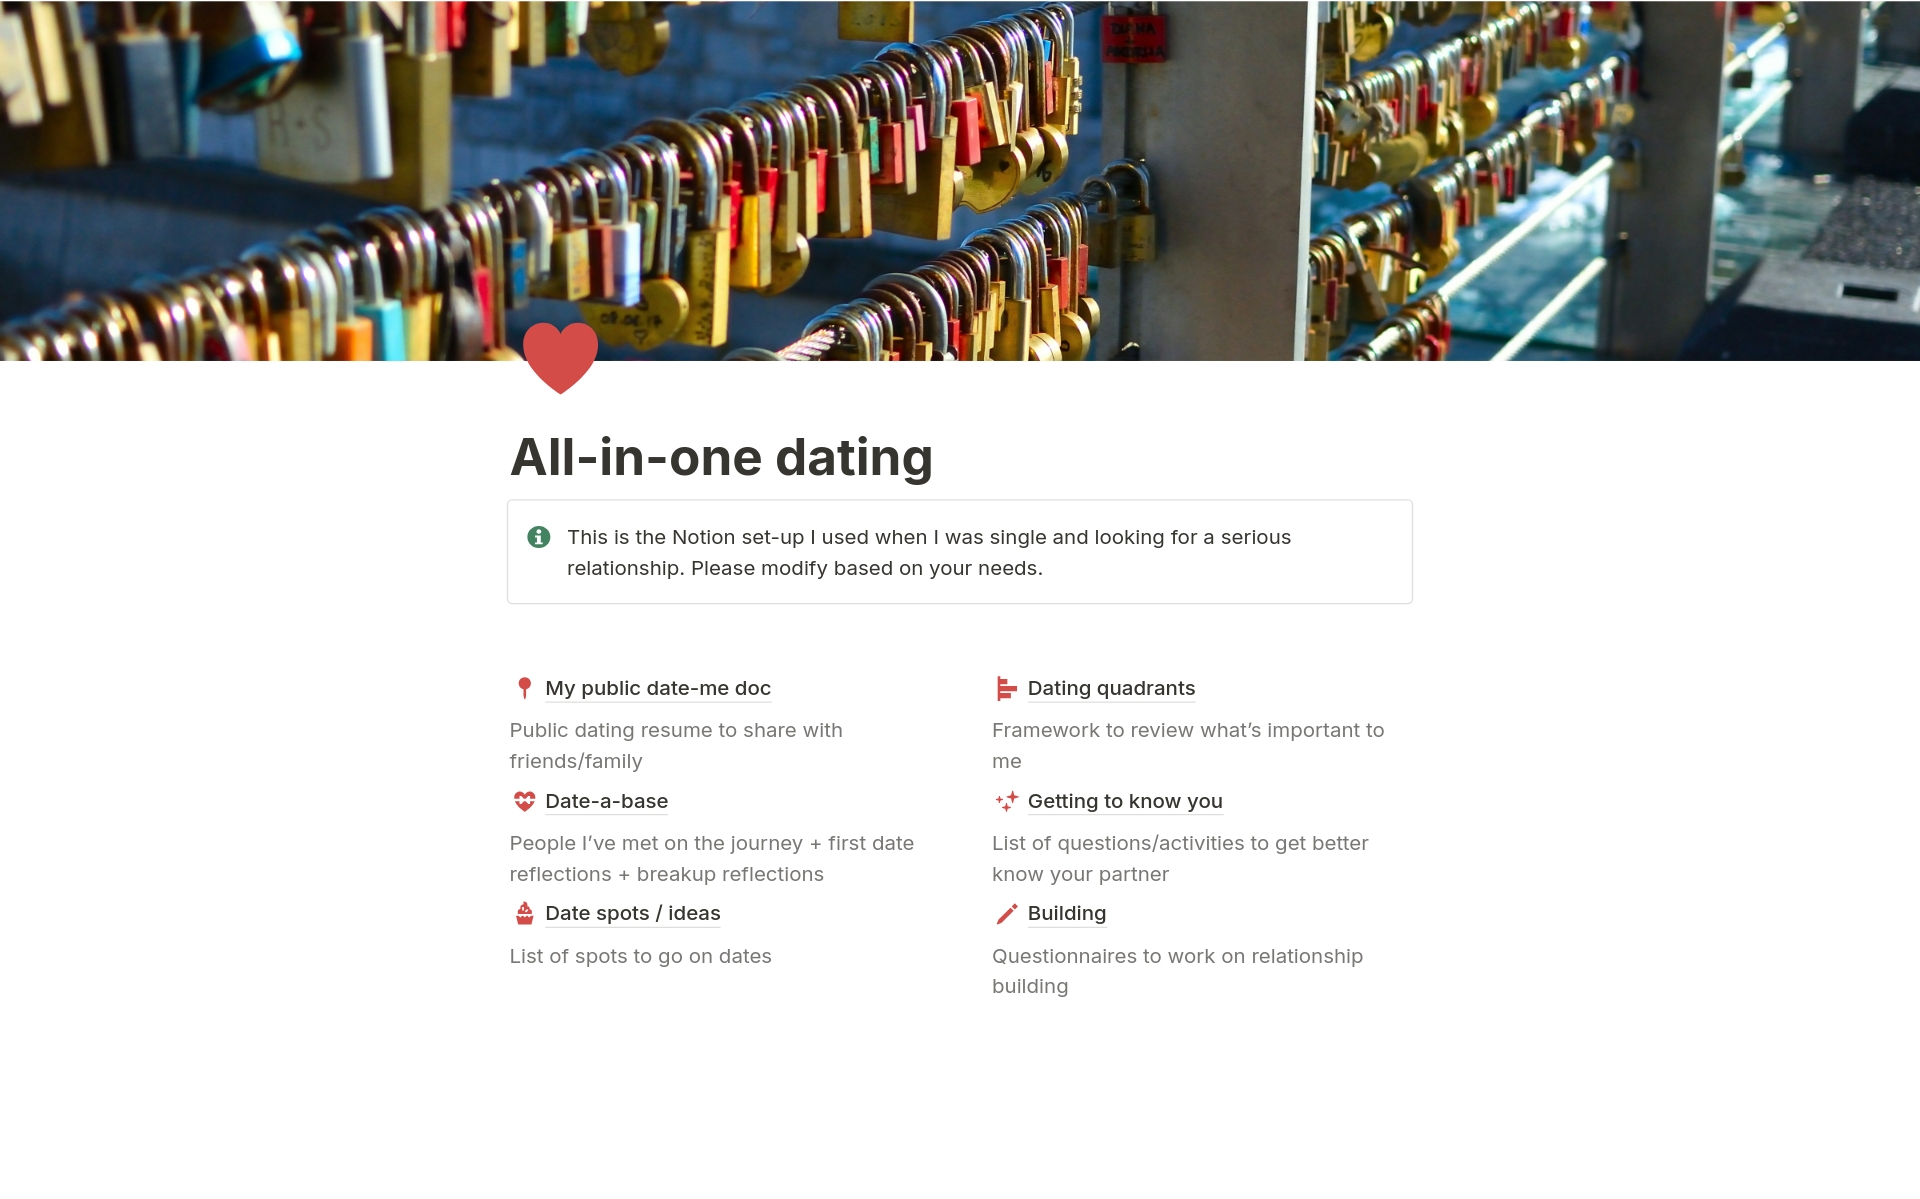 Vista previa de plantilla para All-in-one dating